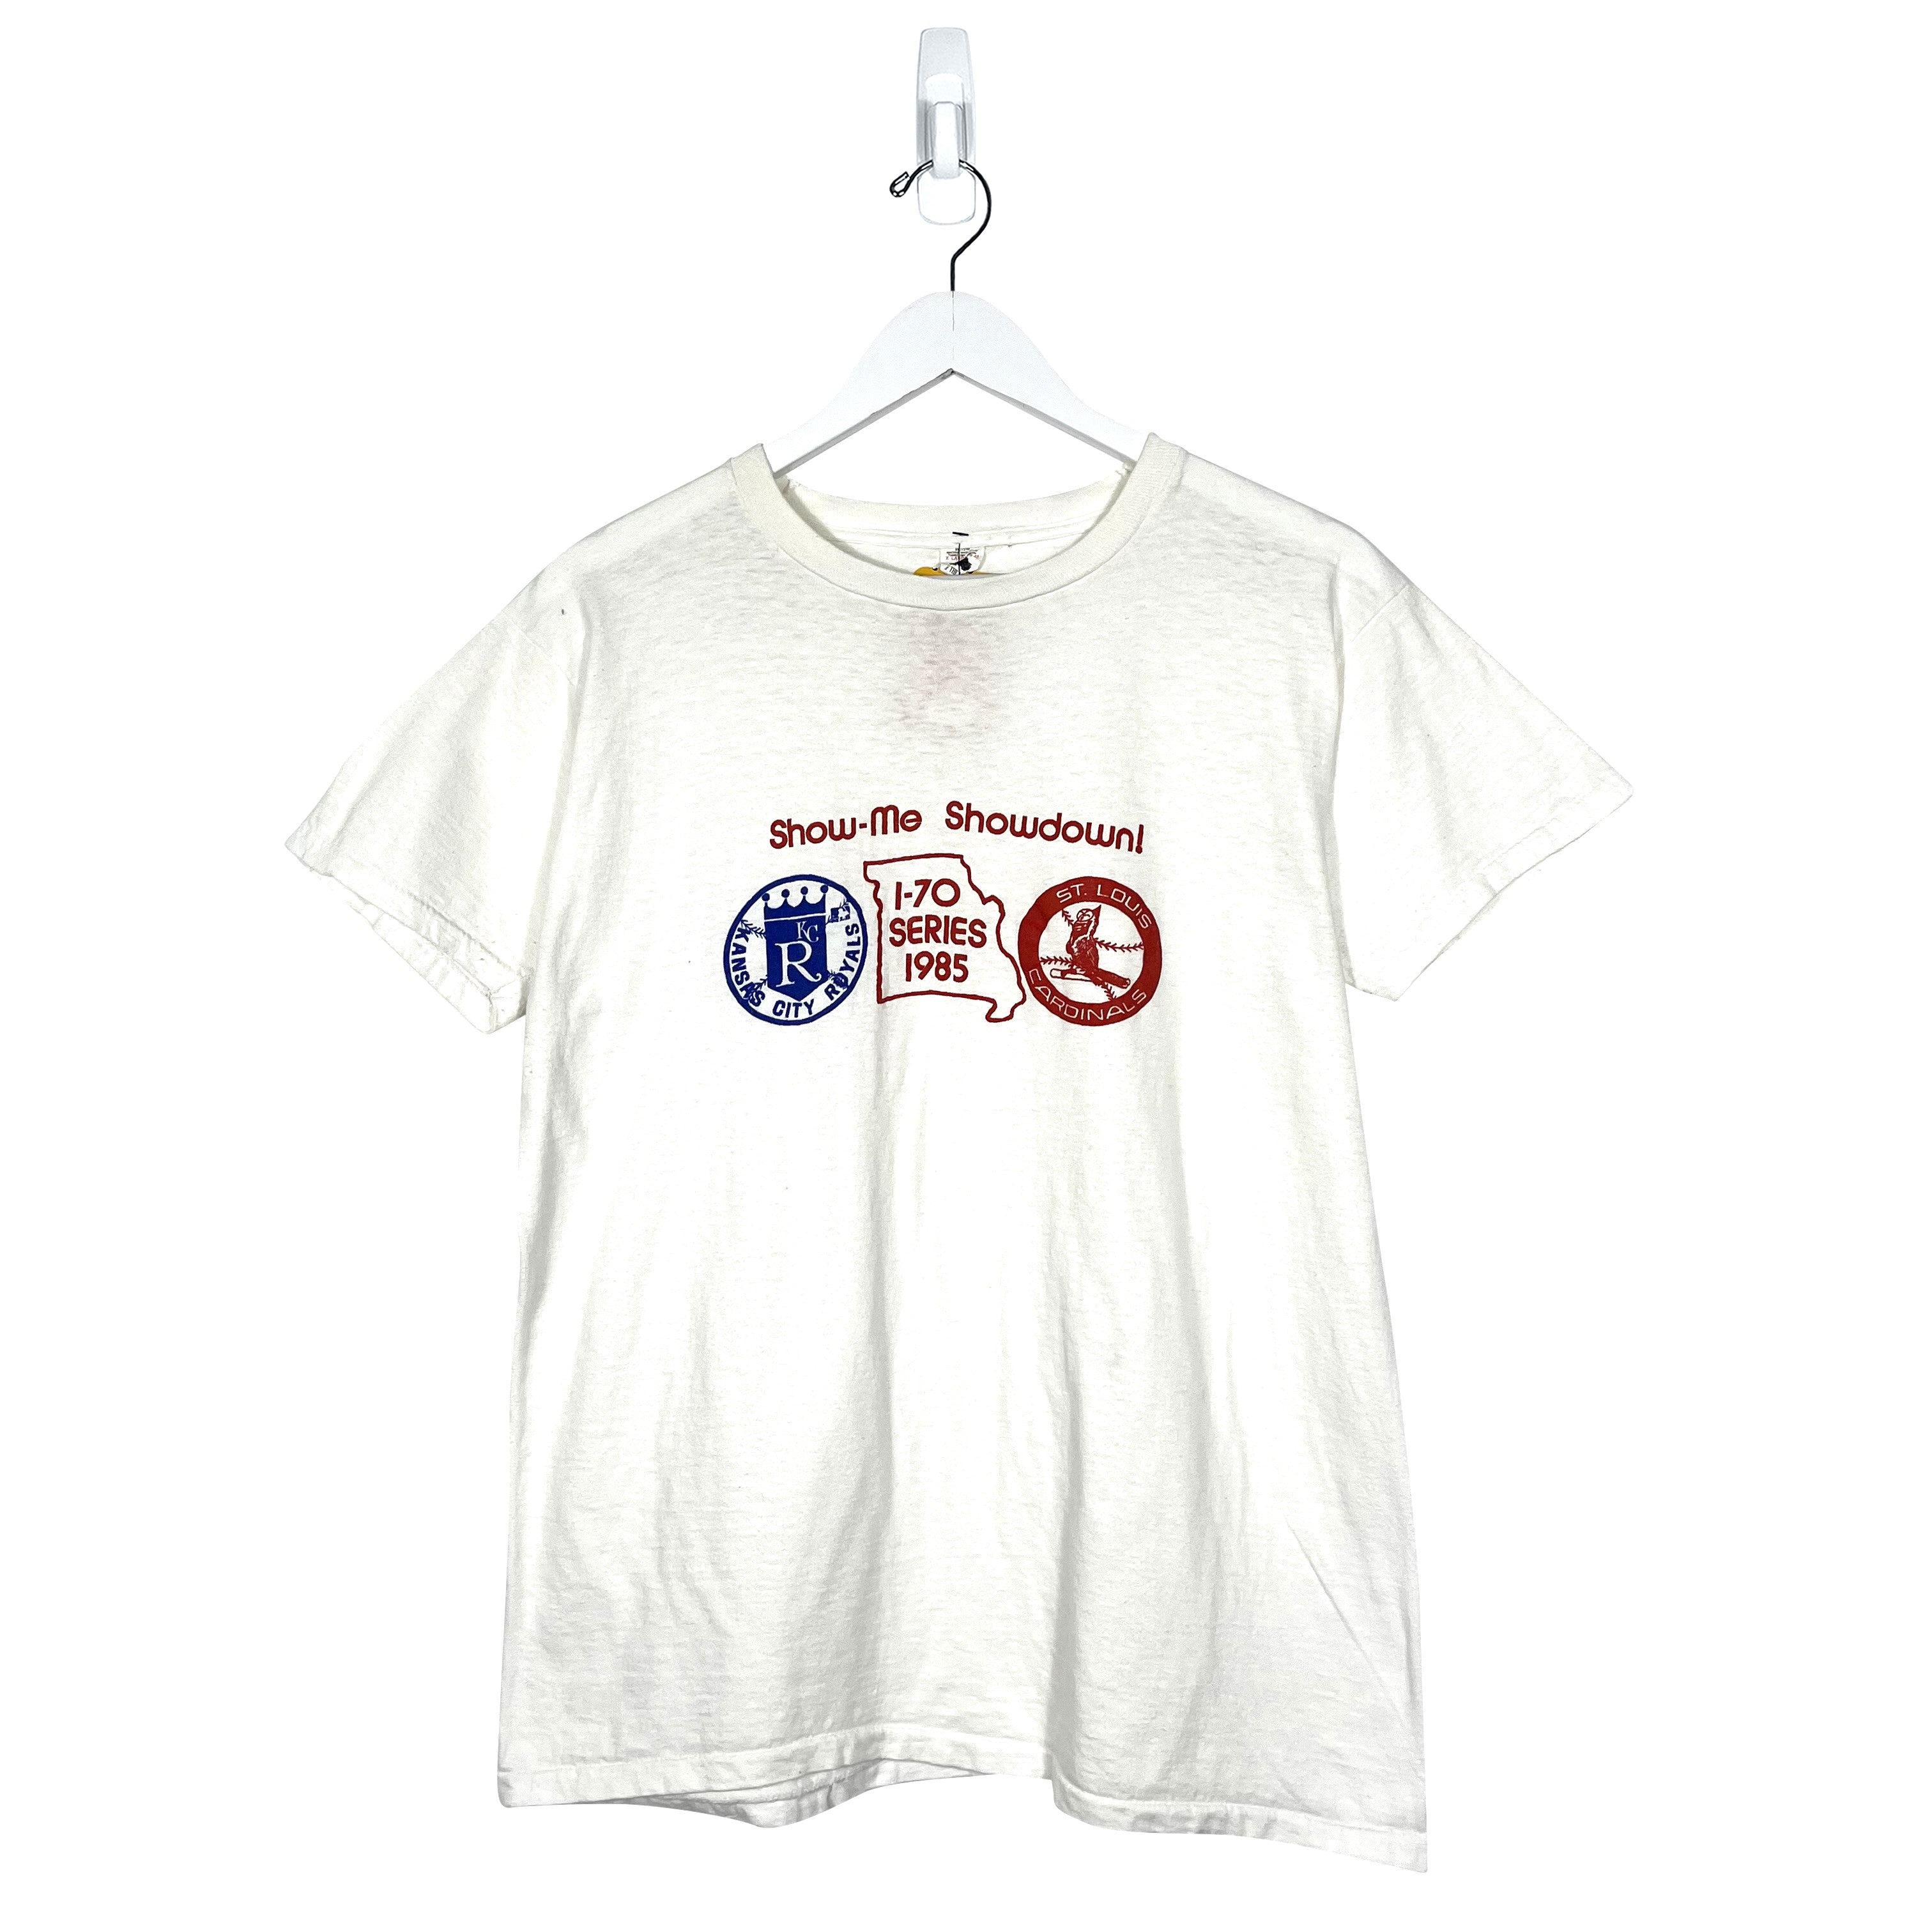 Vintage 1985 MLB World Series T-Shirt  - Women's XL